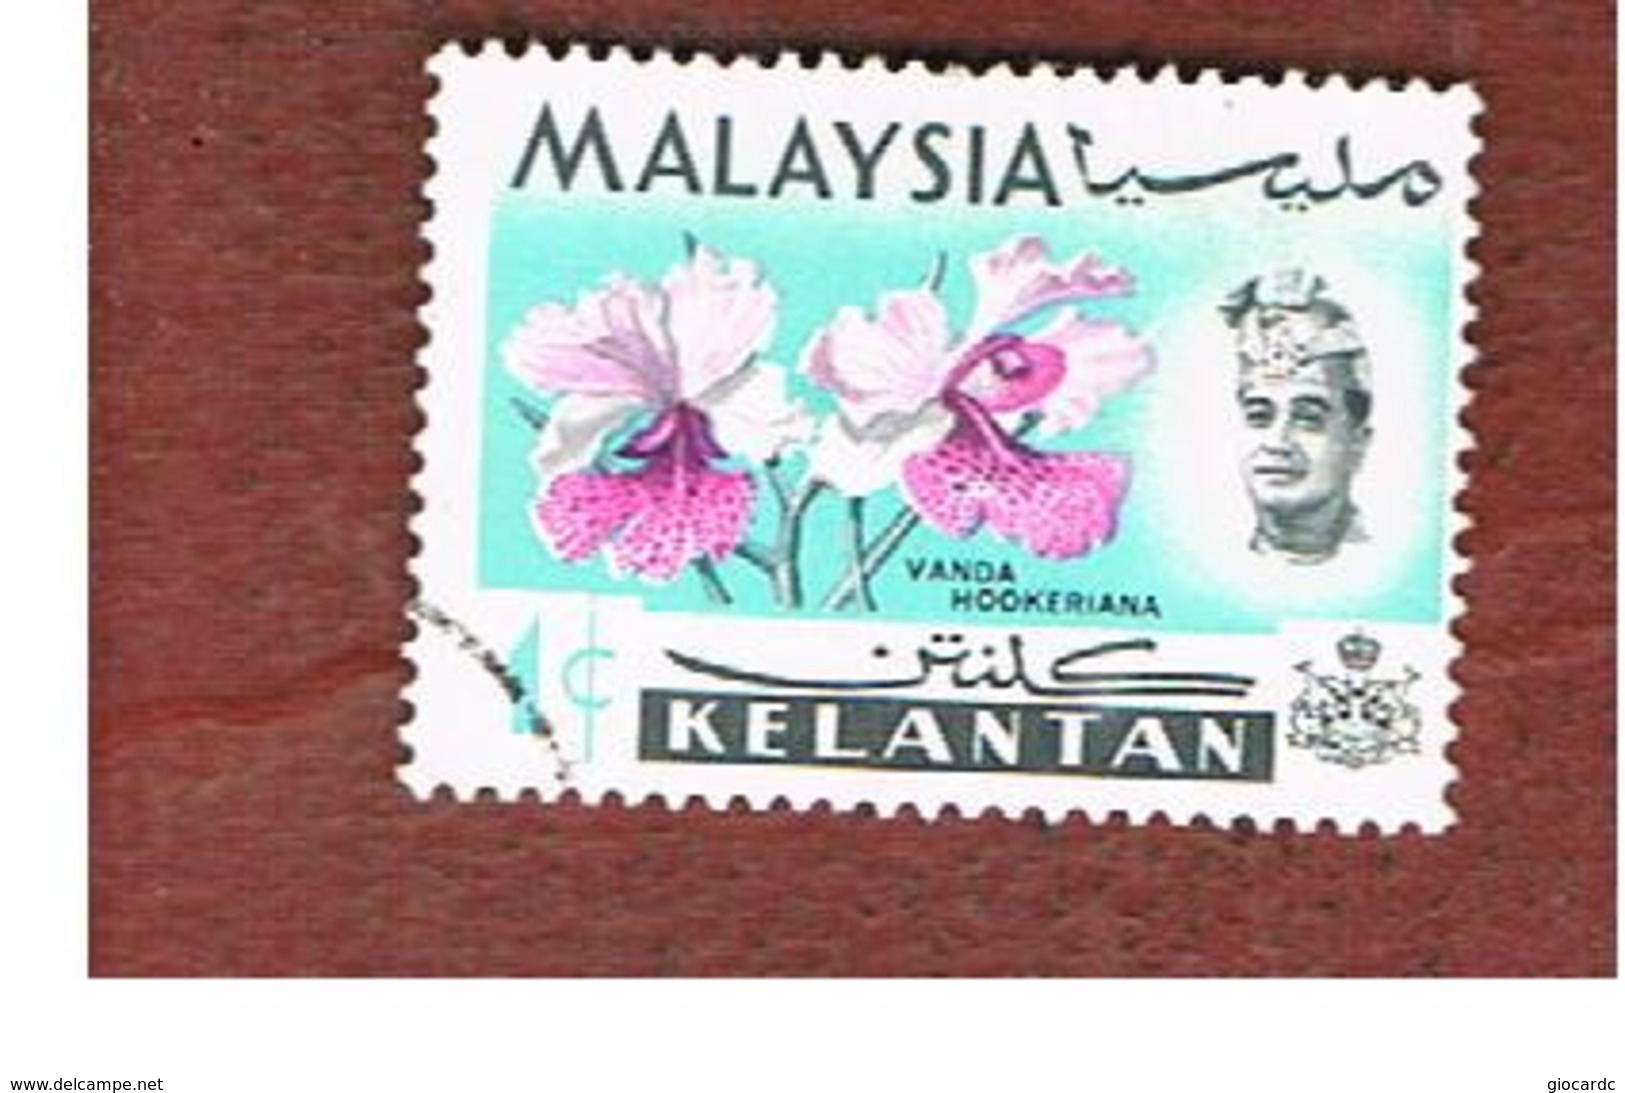 MALESIA: KELANTAN (MALAYSIA) -  SG 103 -  1965   FLOWERS: VANDA HOOKERIANA       - USED ° - Malasia (1964-...)